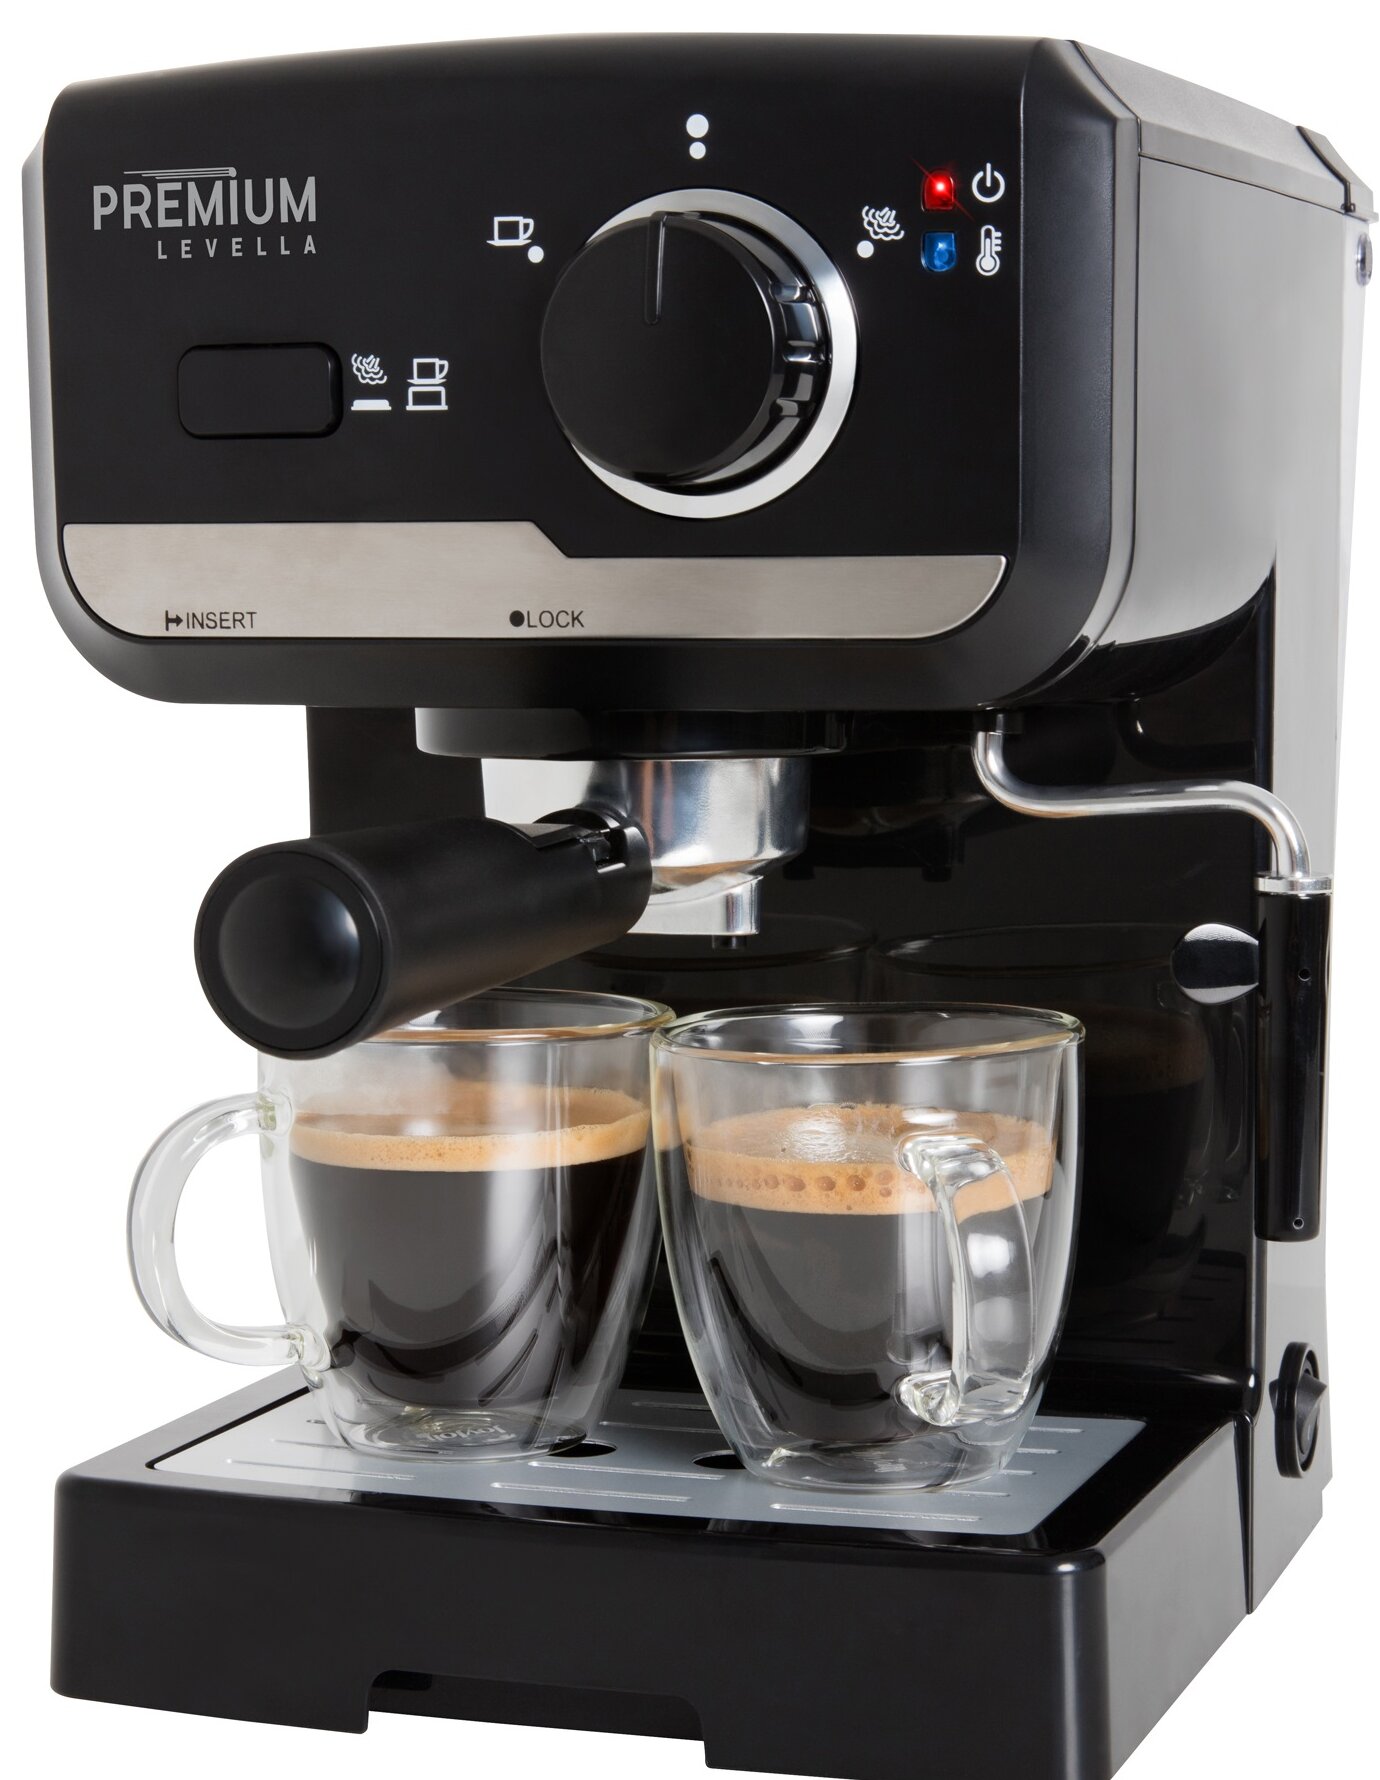 Premium Cappuccino With Bar Pump Automatic Espresso Machine Reviews Wayfair